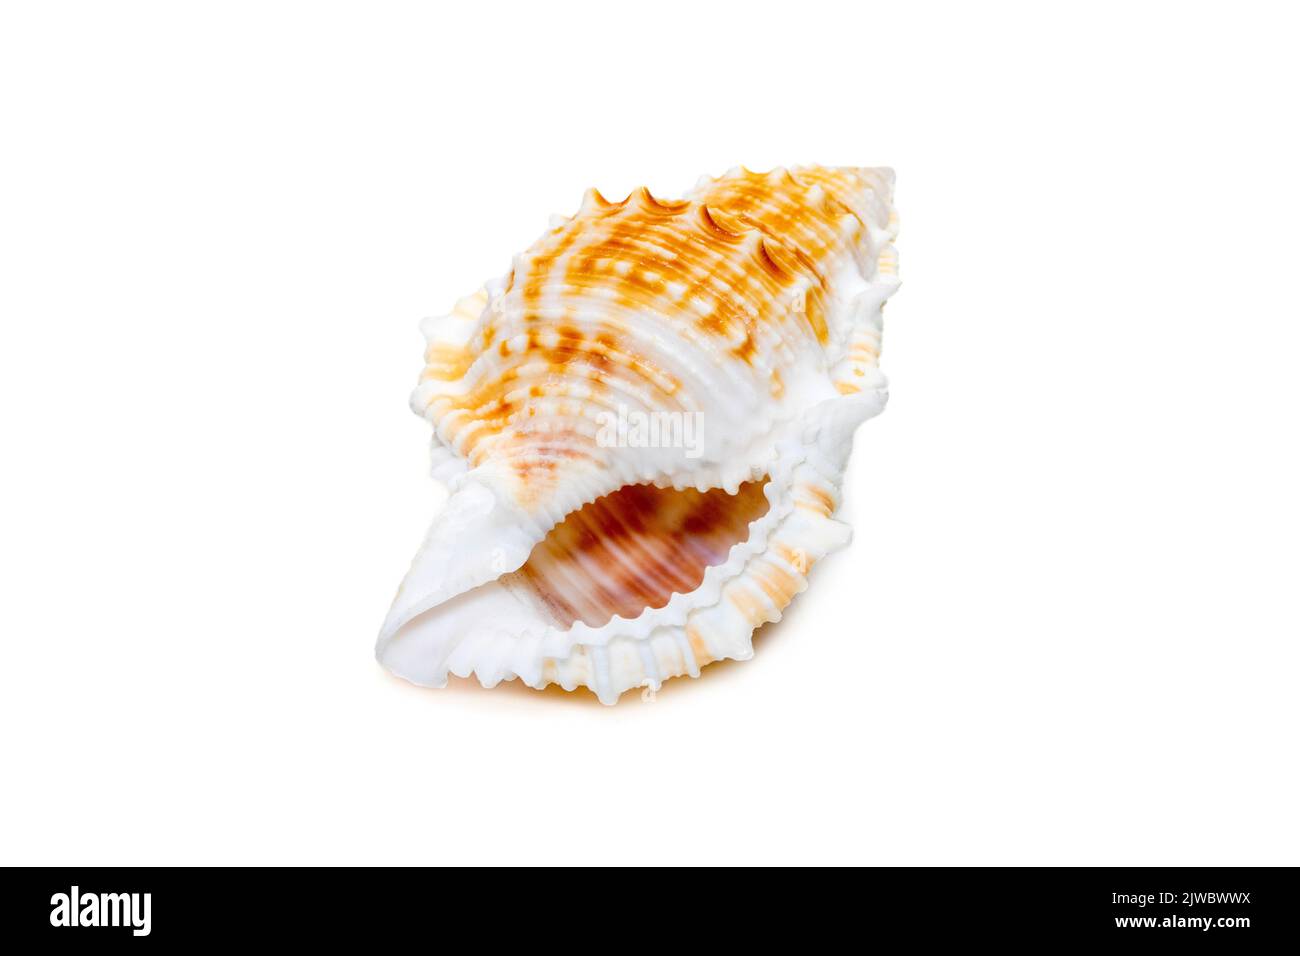 Image de bufonaria le coquillage de rana est une espèce d'escargot de mer, un mollusque de gastropodes marin de la famille des Bursidae, les coquilles de grenouilles isolées sur le dos blanc Banque D'Images